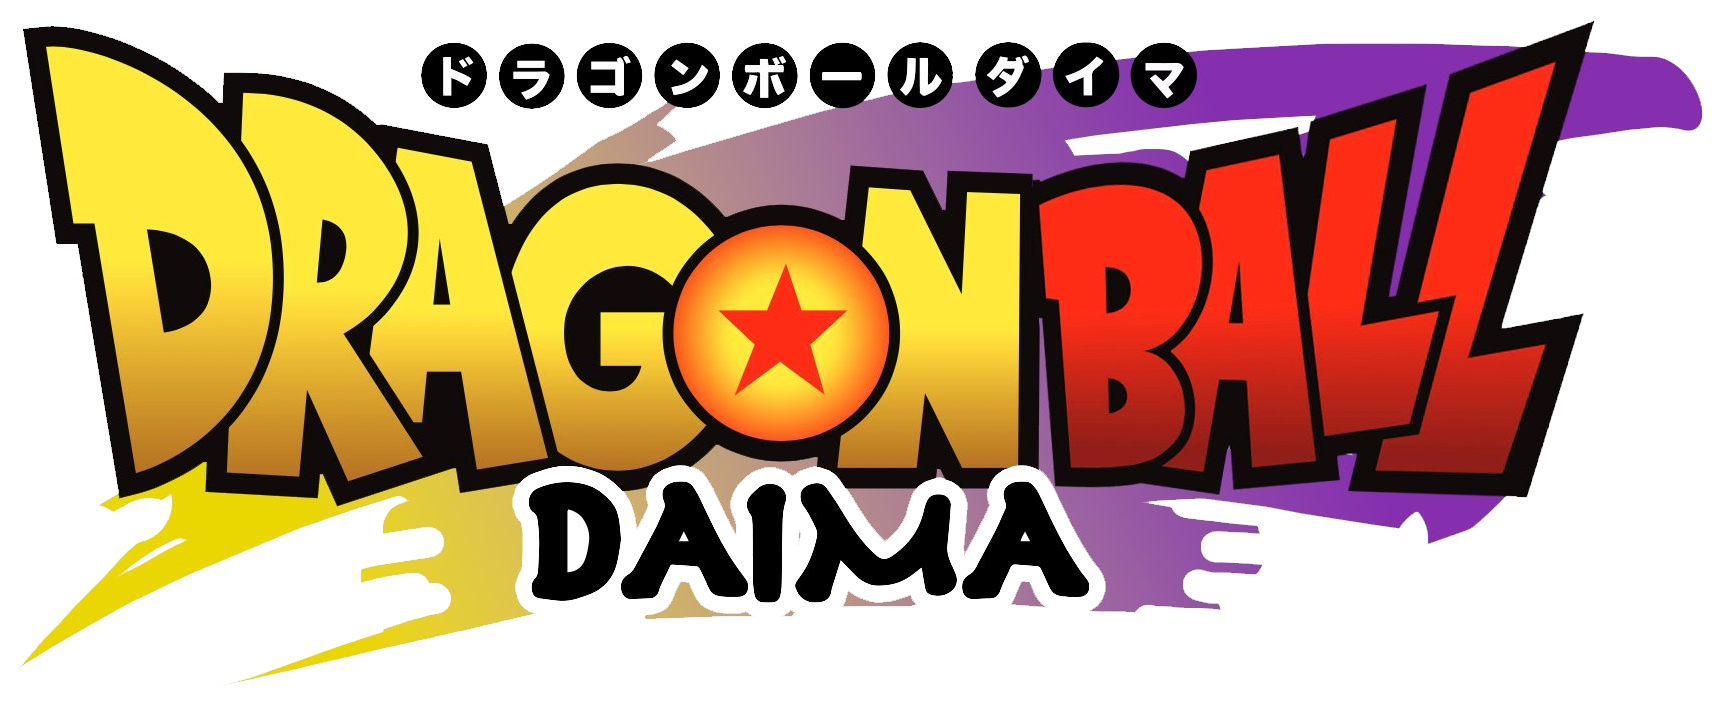 Dragon Ball Daima?!